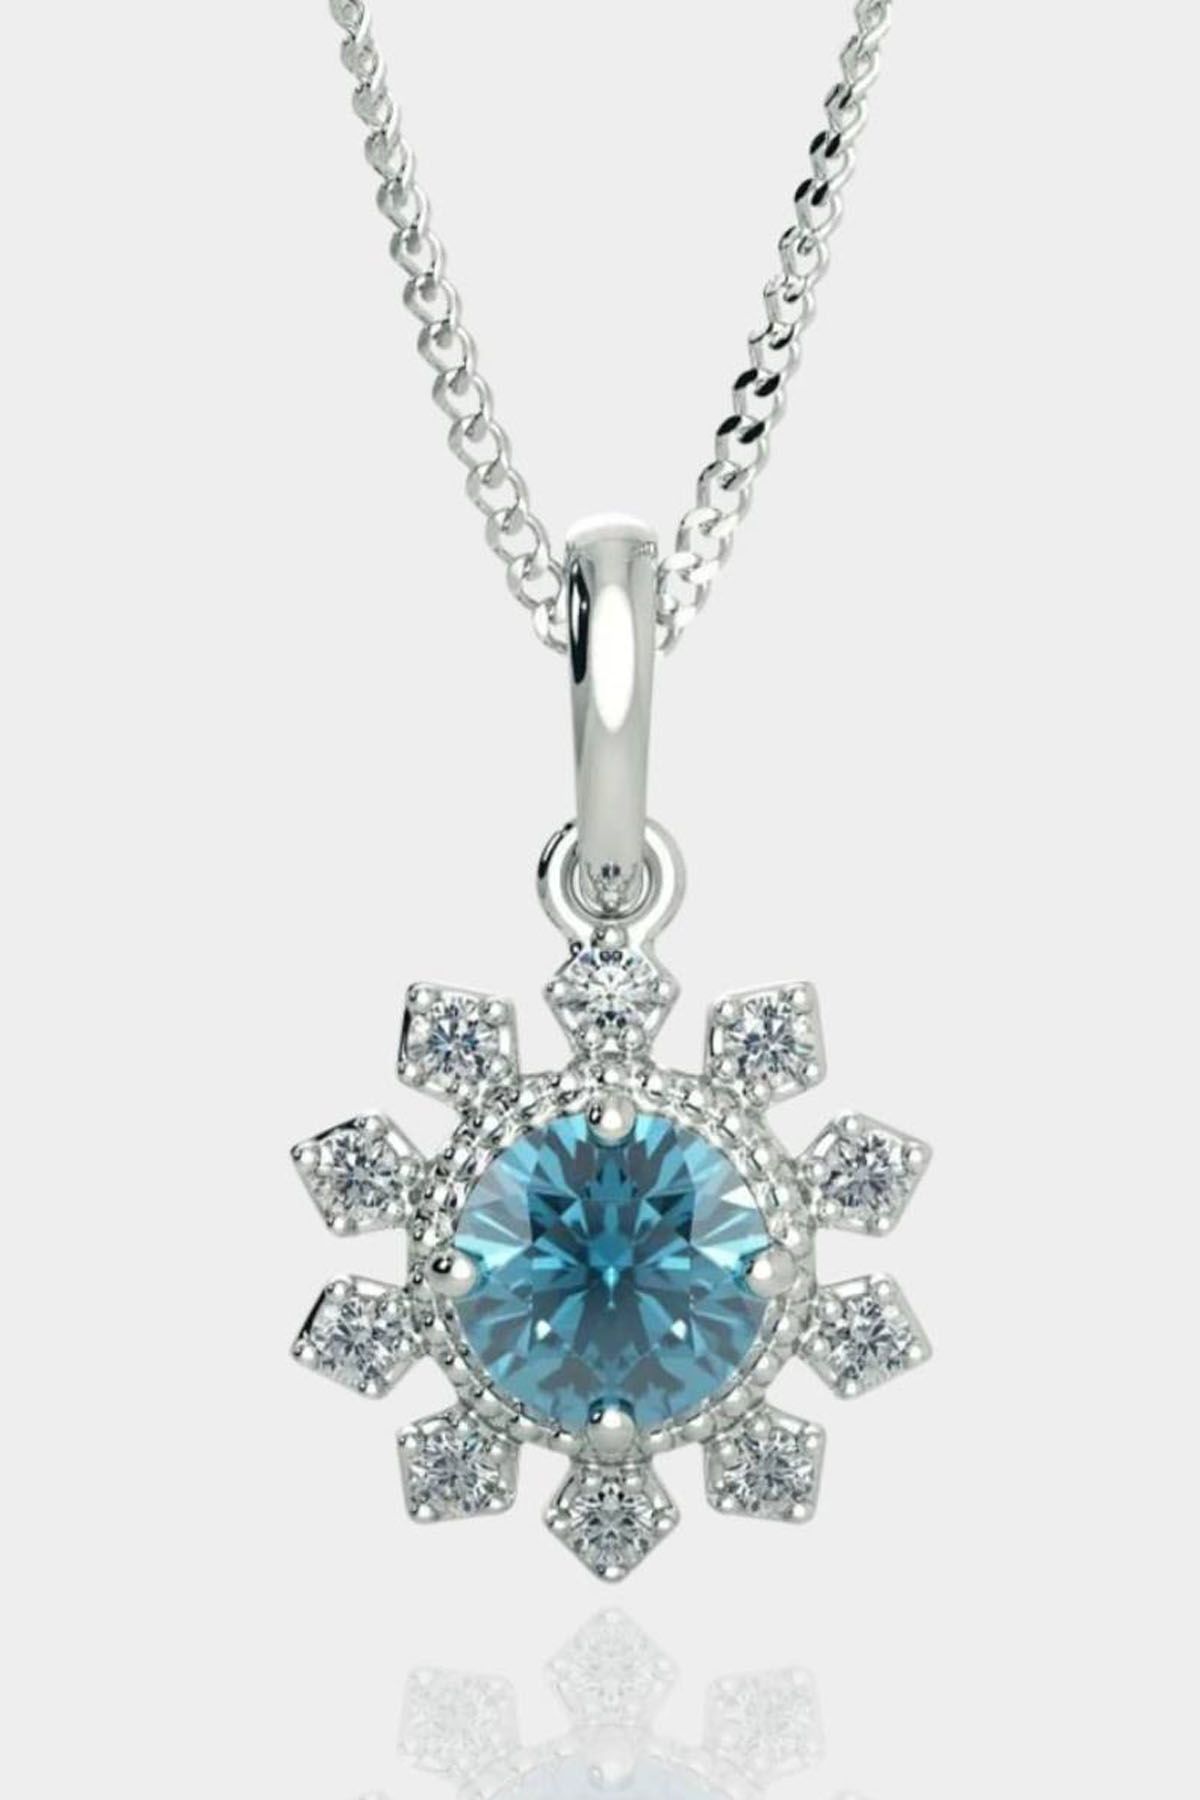 Alexandra Aquamarine Necklace - 925 Silver